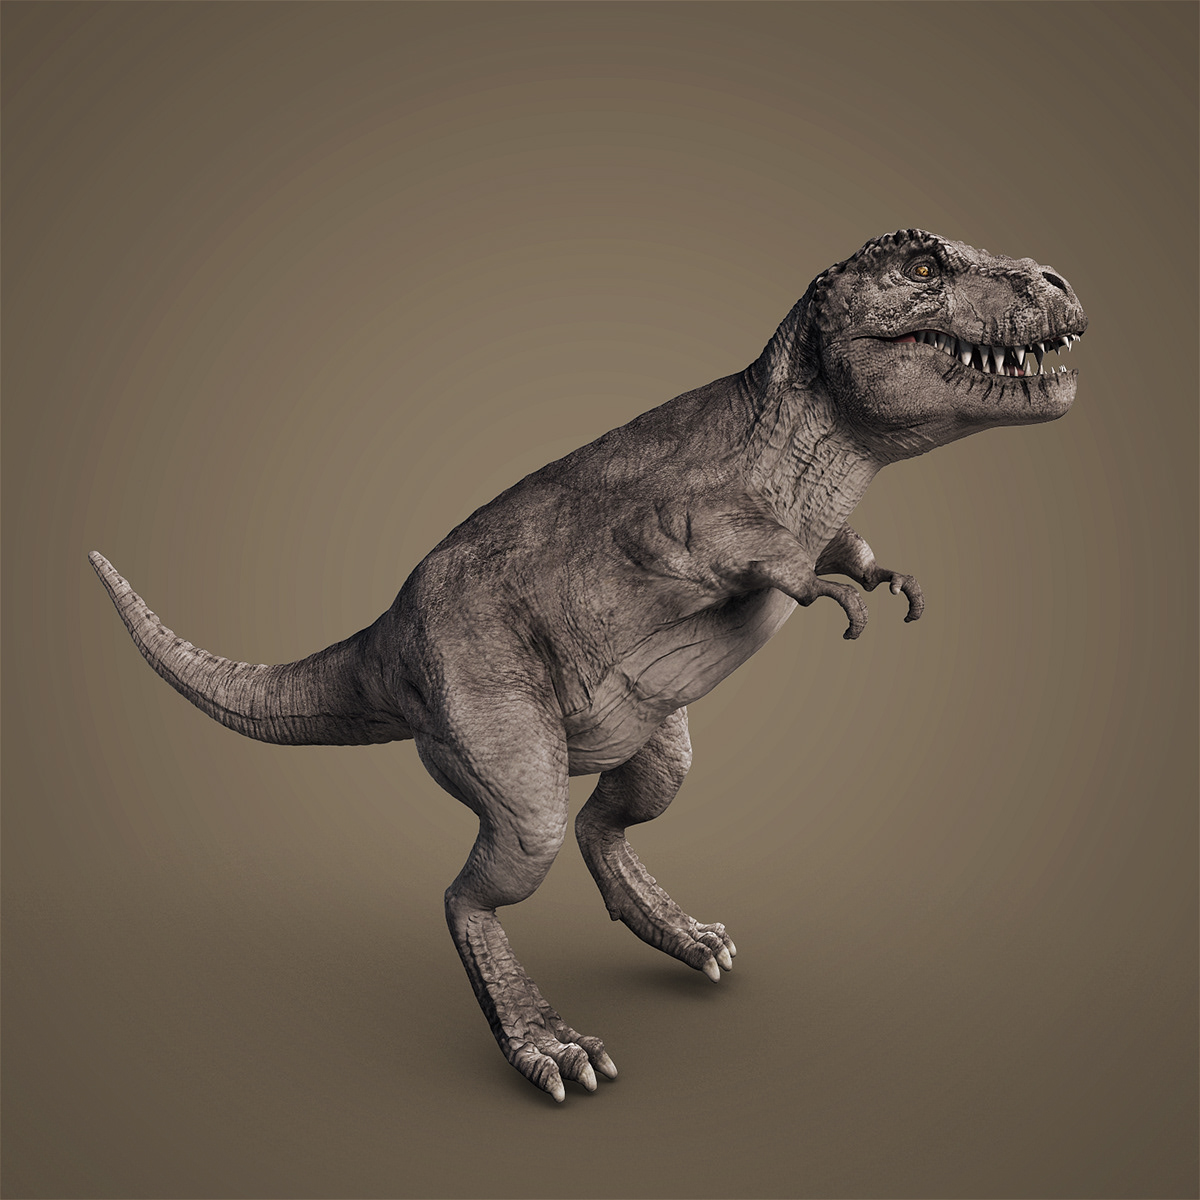 trex REX dinossauro Dinosaur reptil reptile monster Samsung